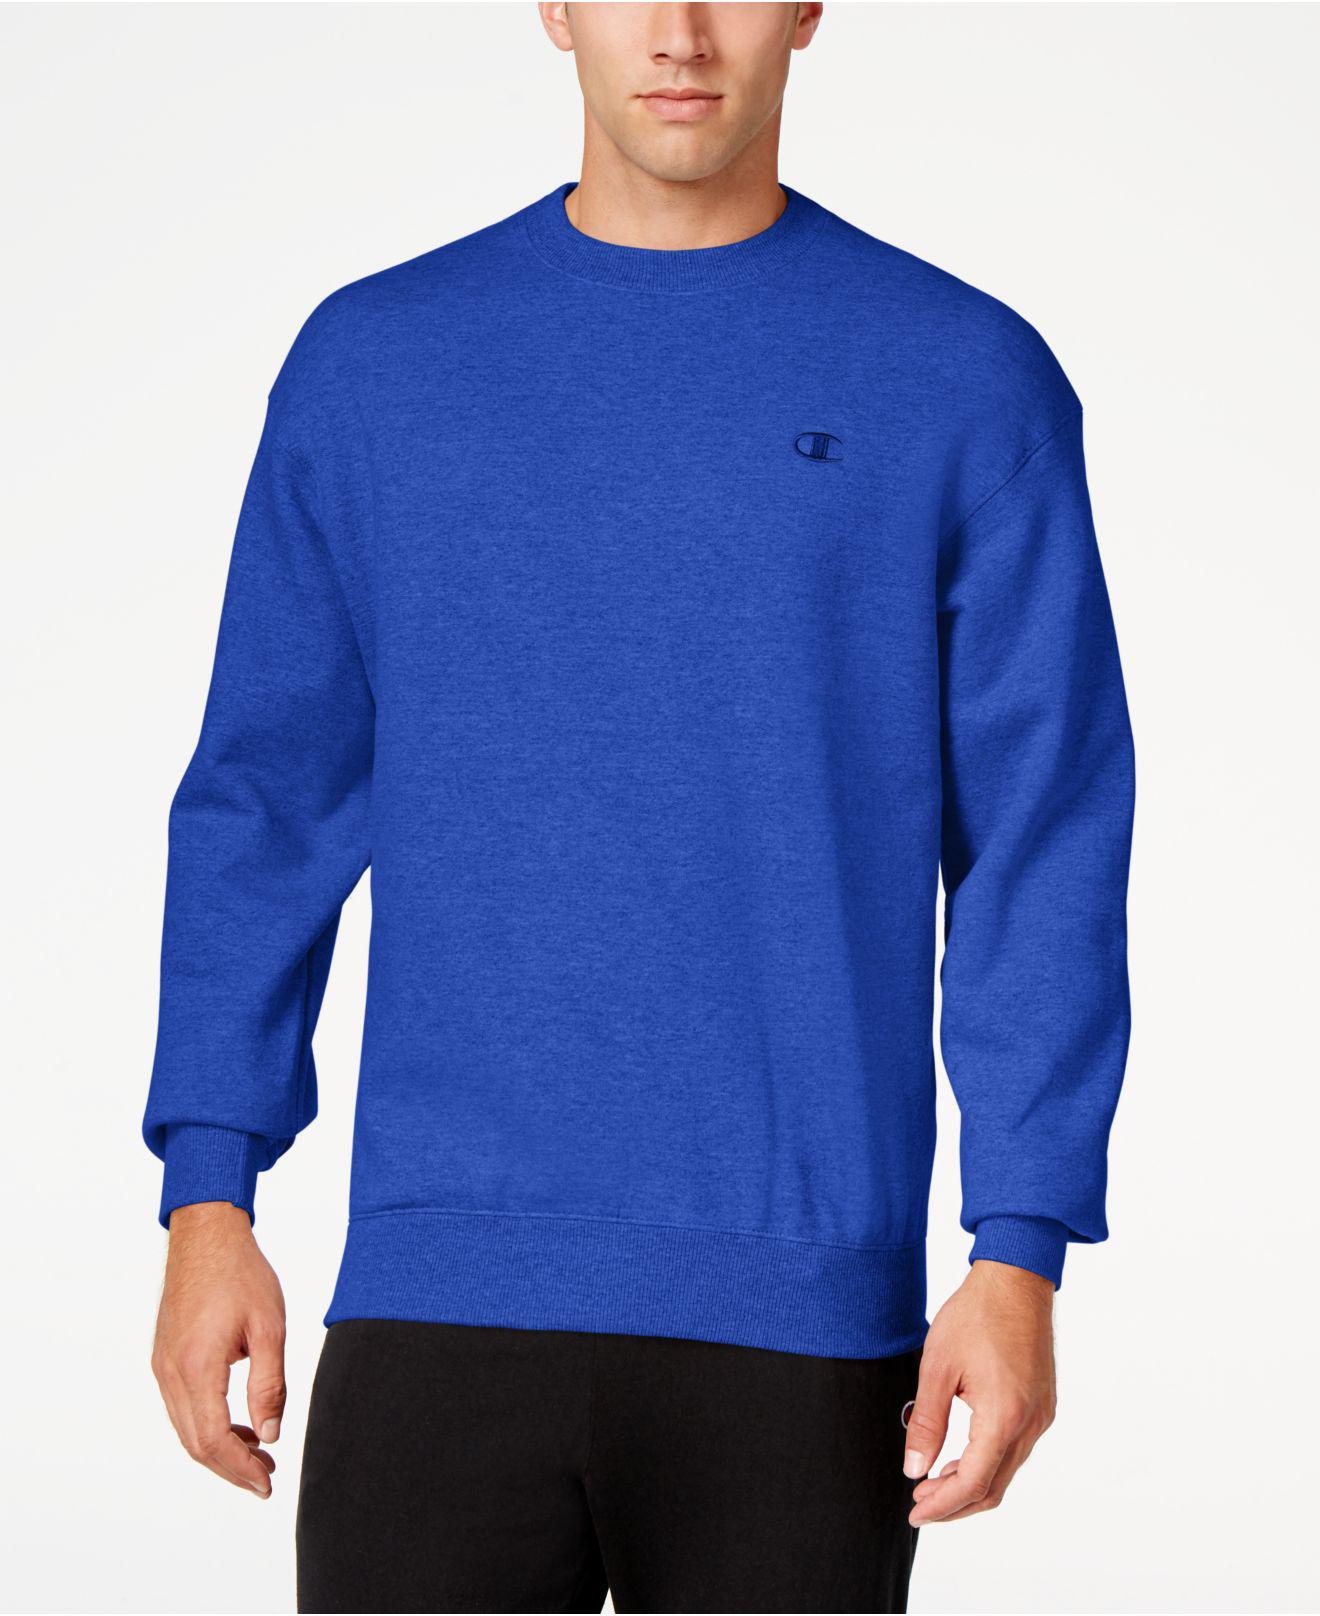 champion powerblend fleece sweatshirt